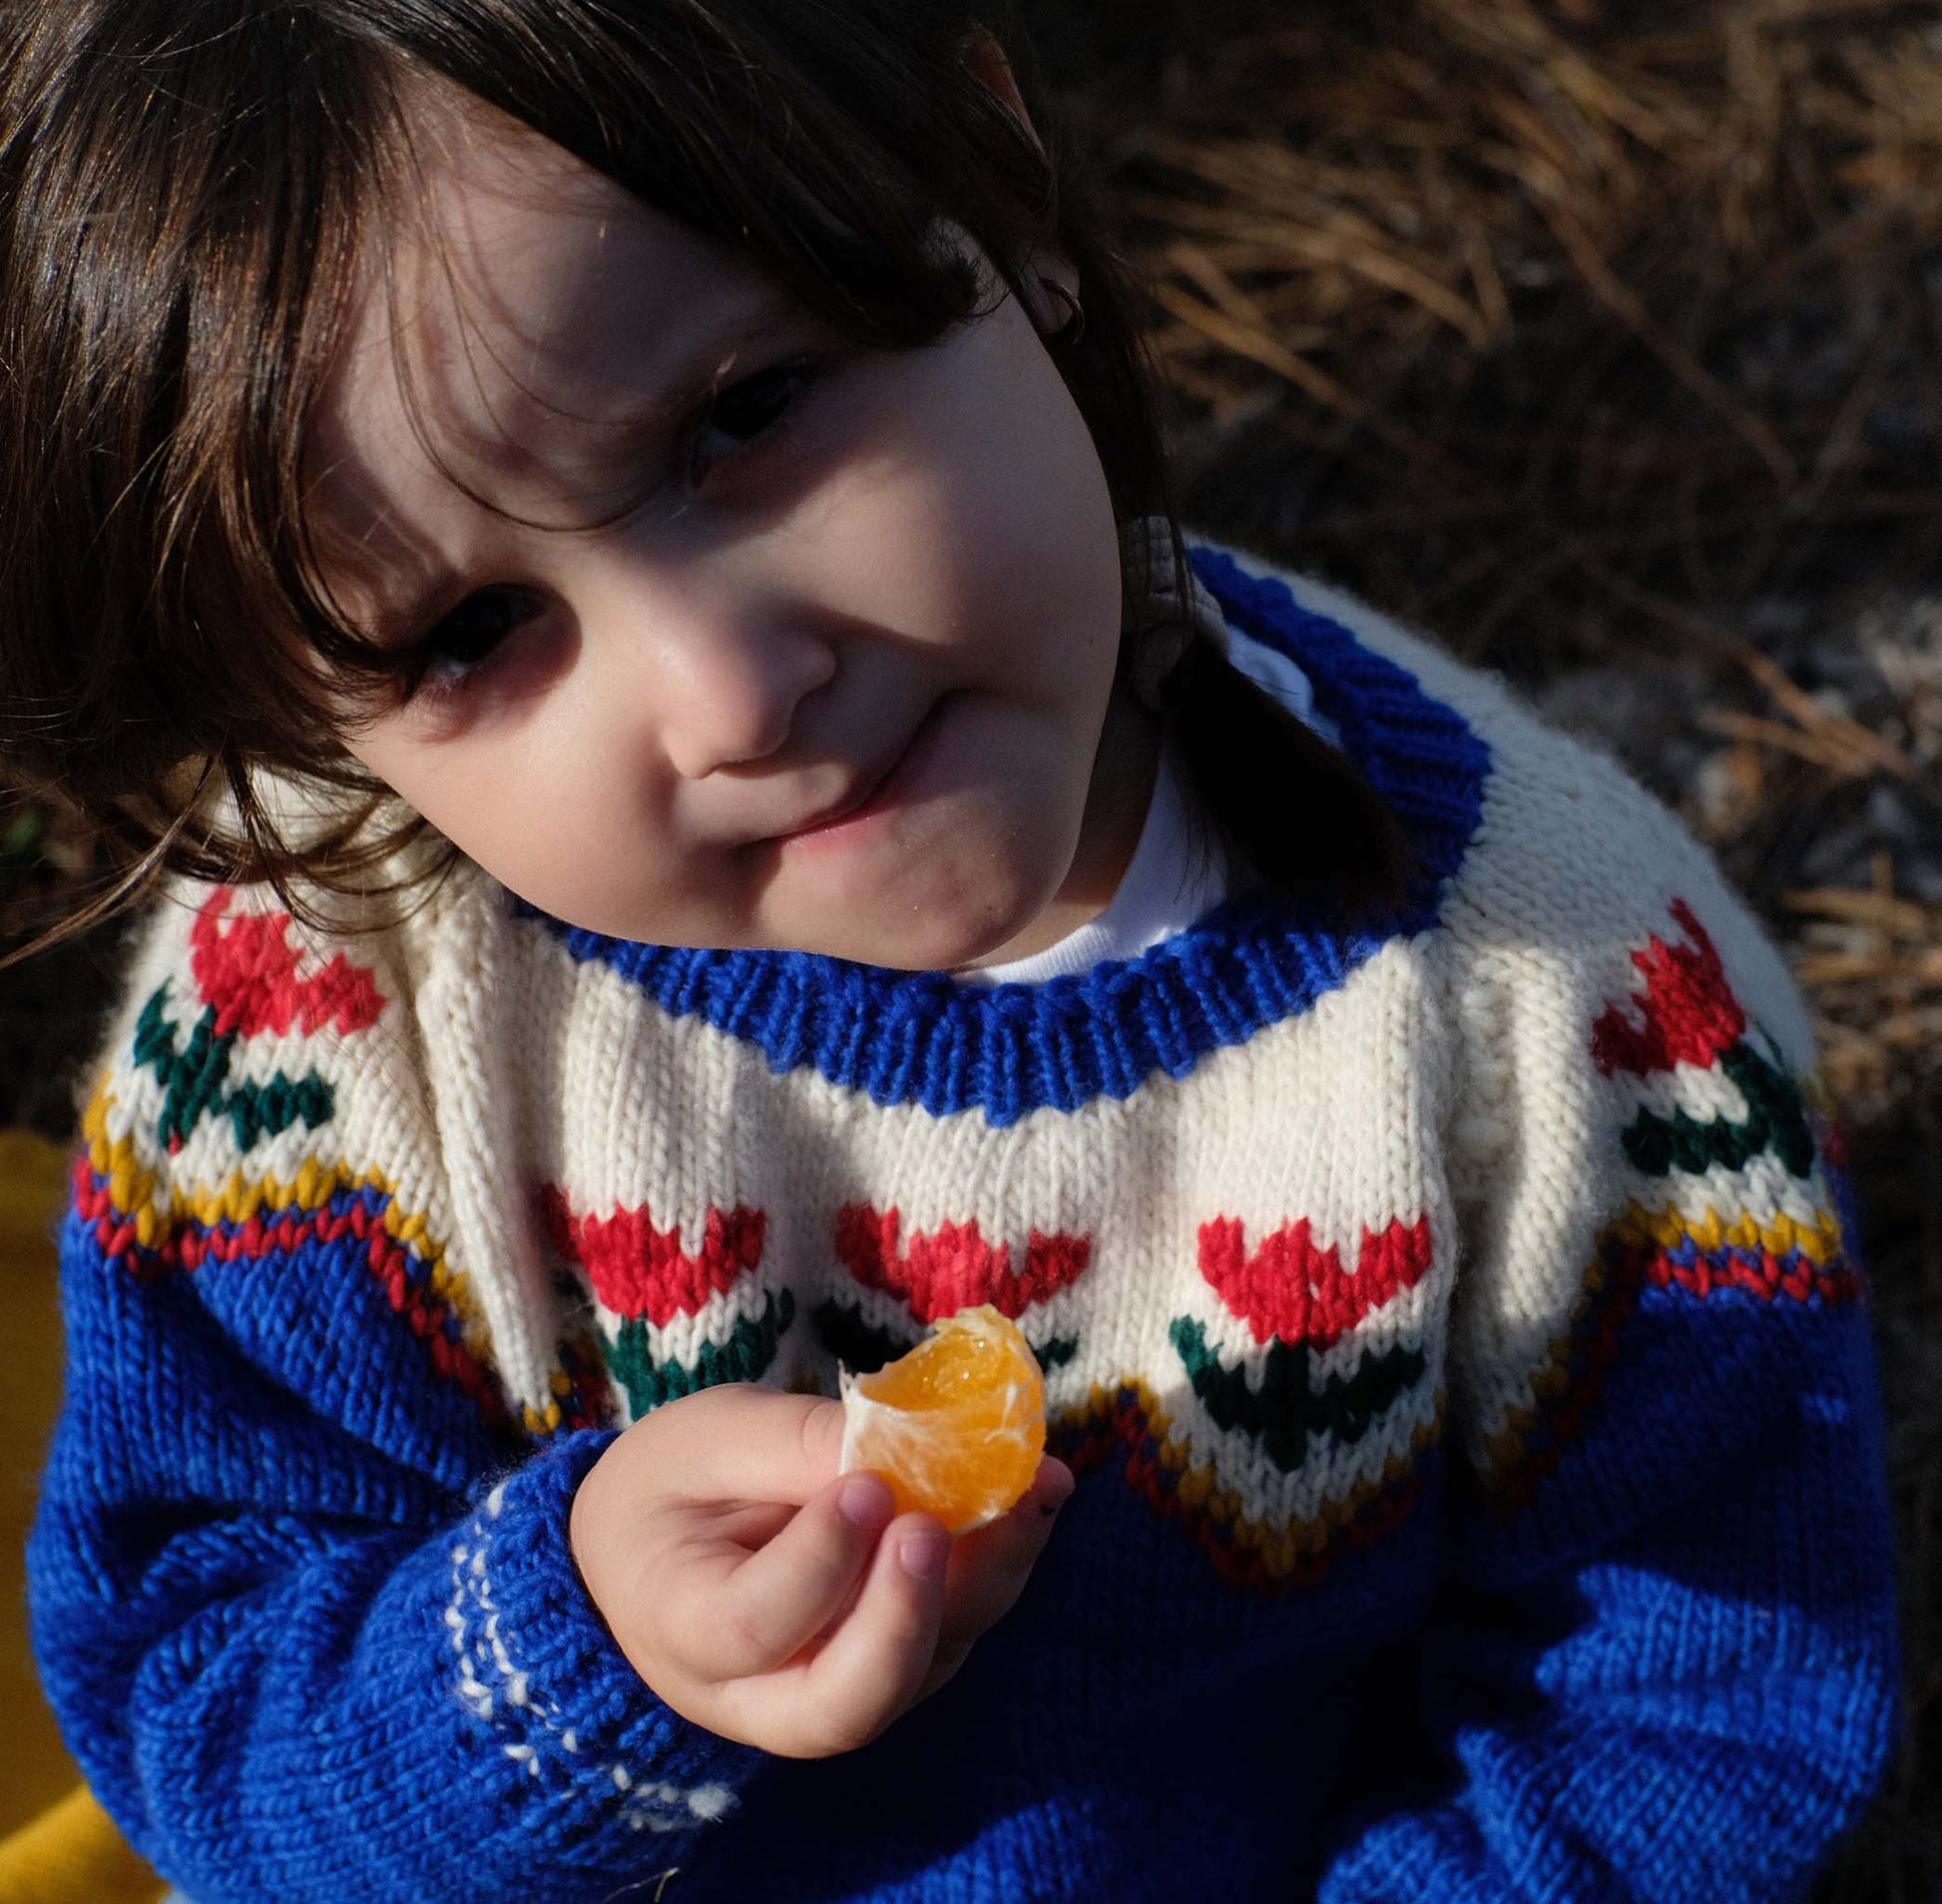 kids sweater in merino wool